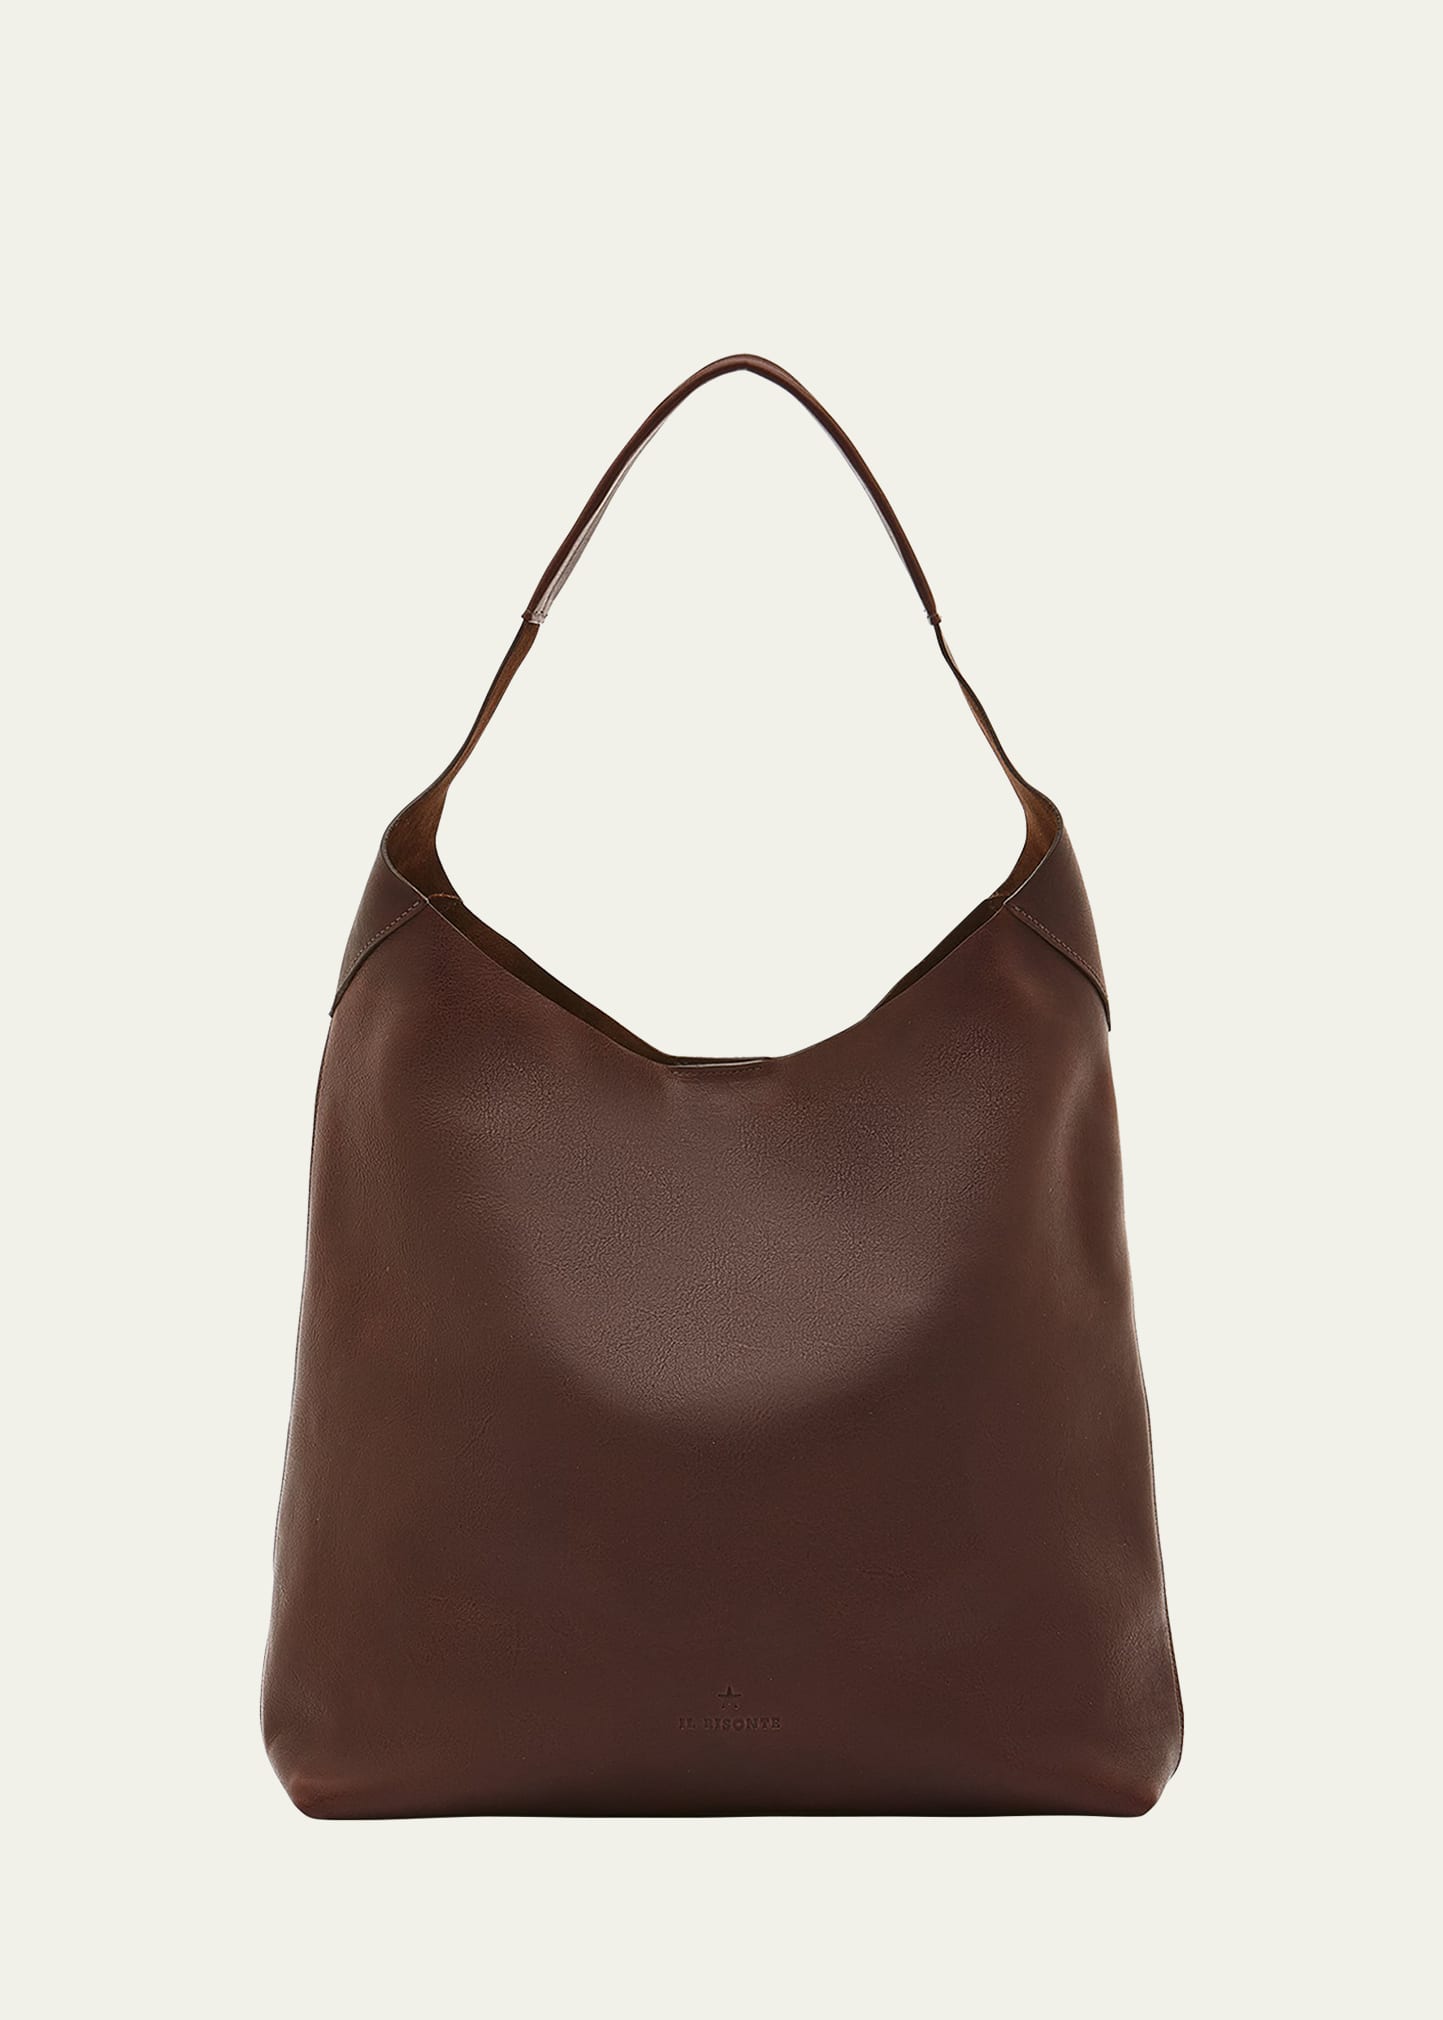 Il Bisonte Women's Le Laudi Leather Hobo Bag In Caffe